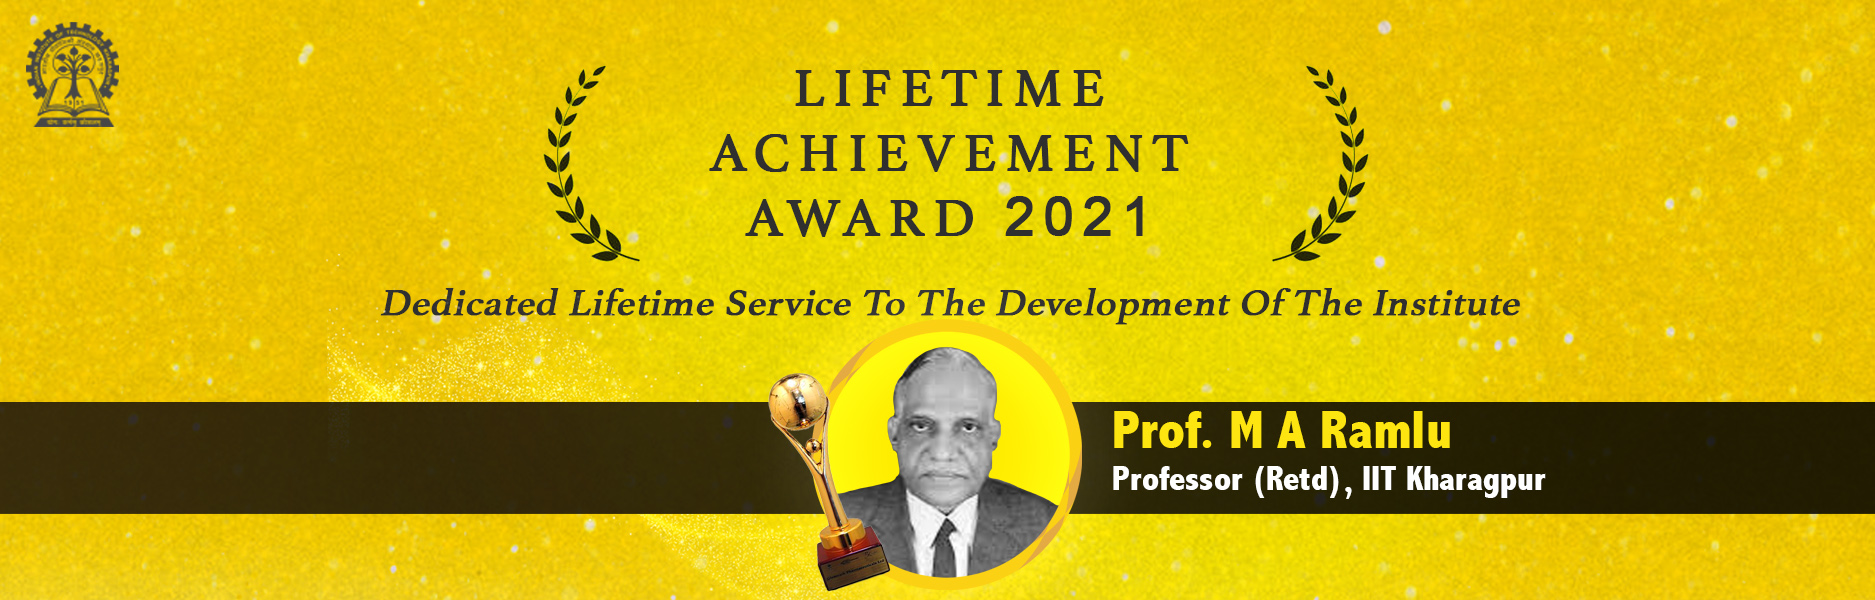 Lifetime Achievement Award 2021